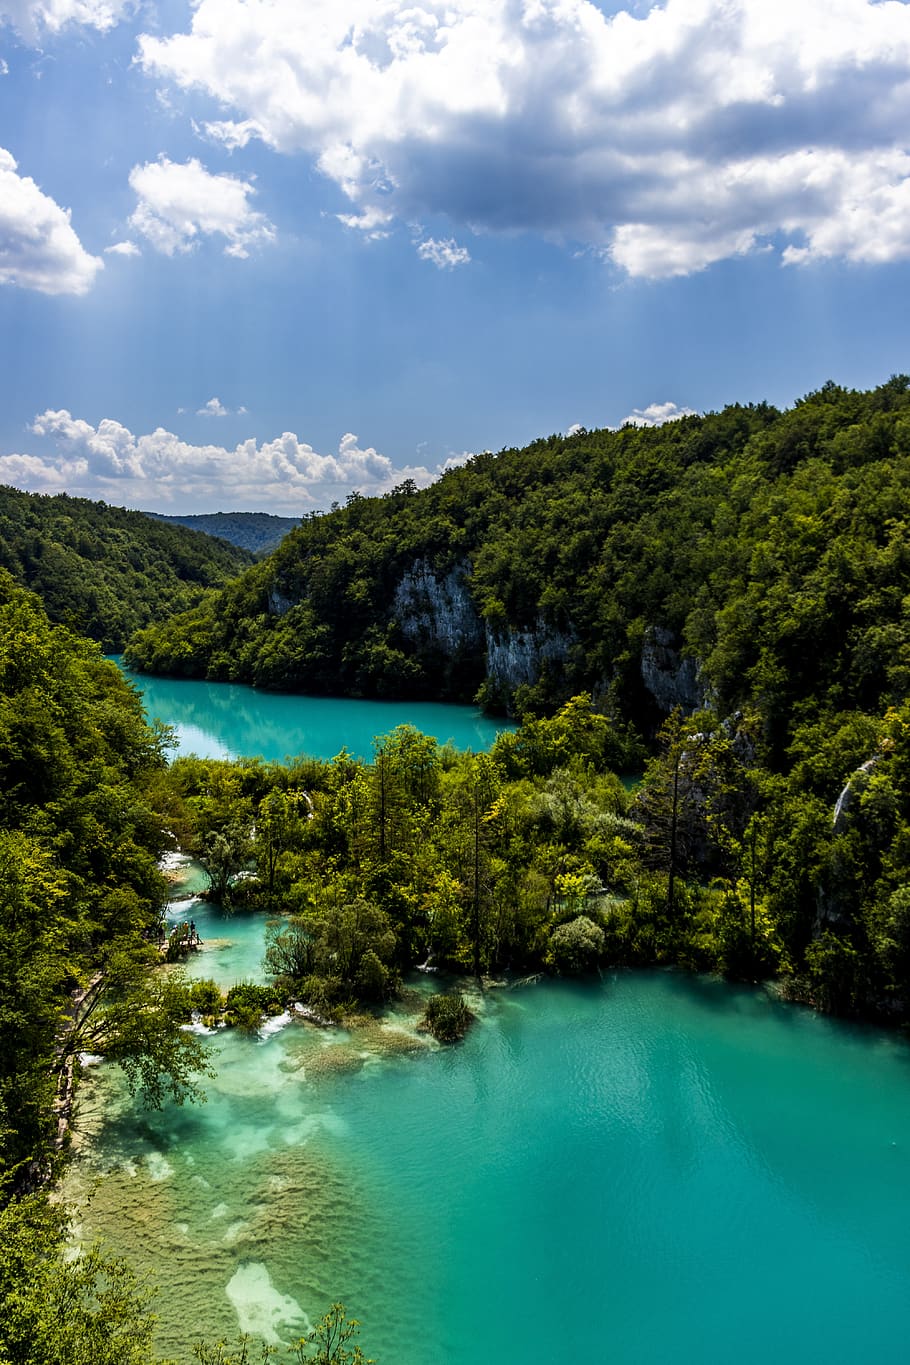 croatia, plitvice, national park, water, beauty in nature, scenics - nature